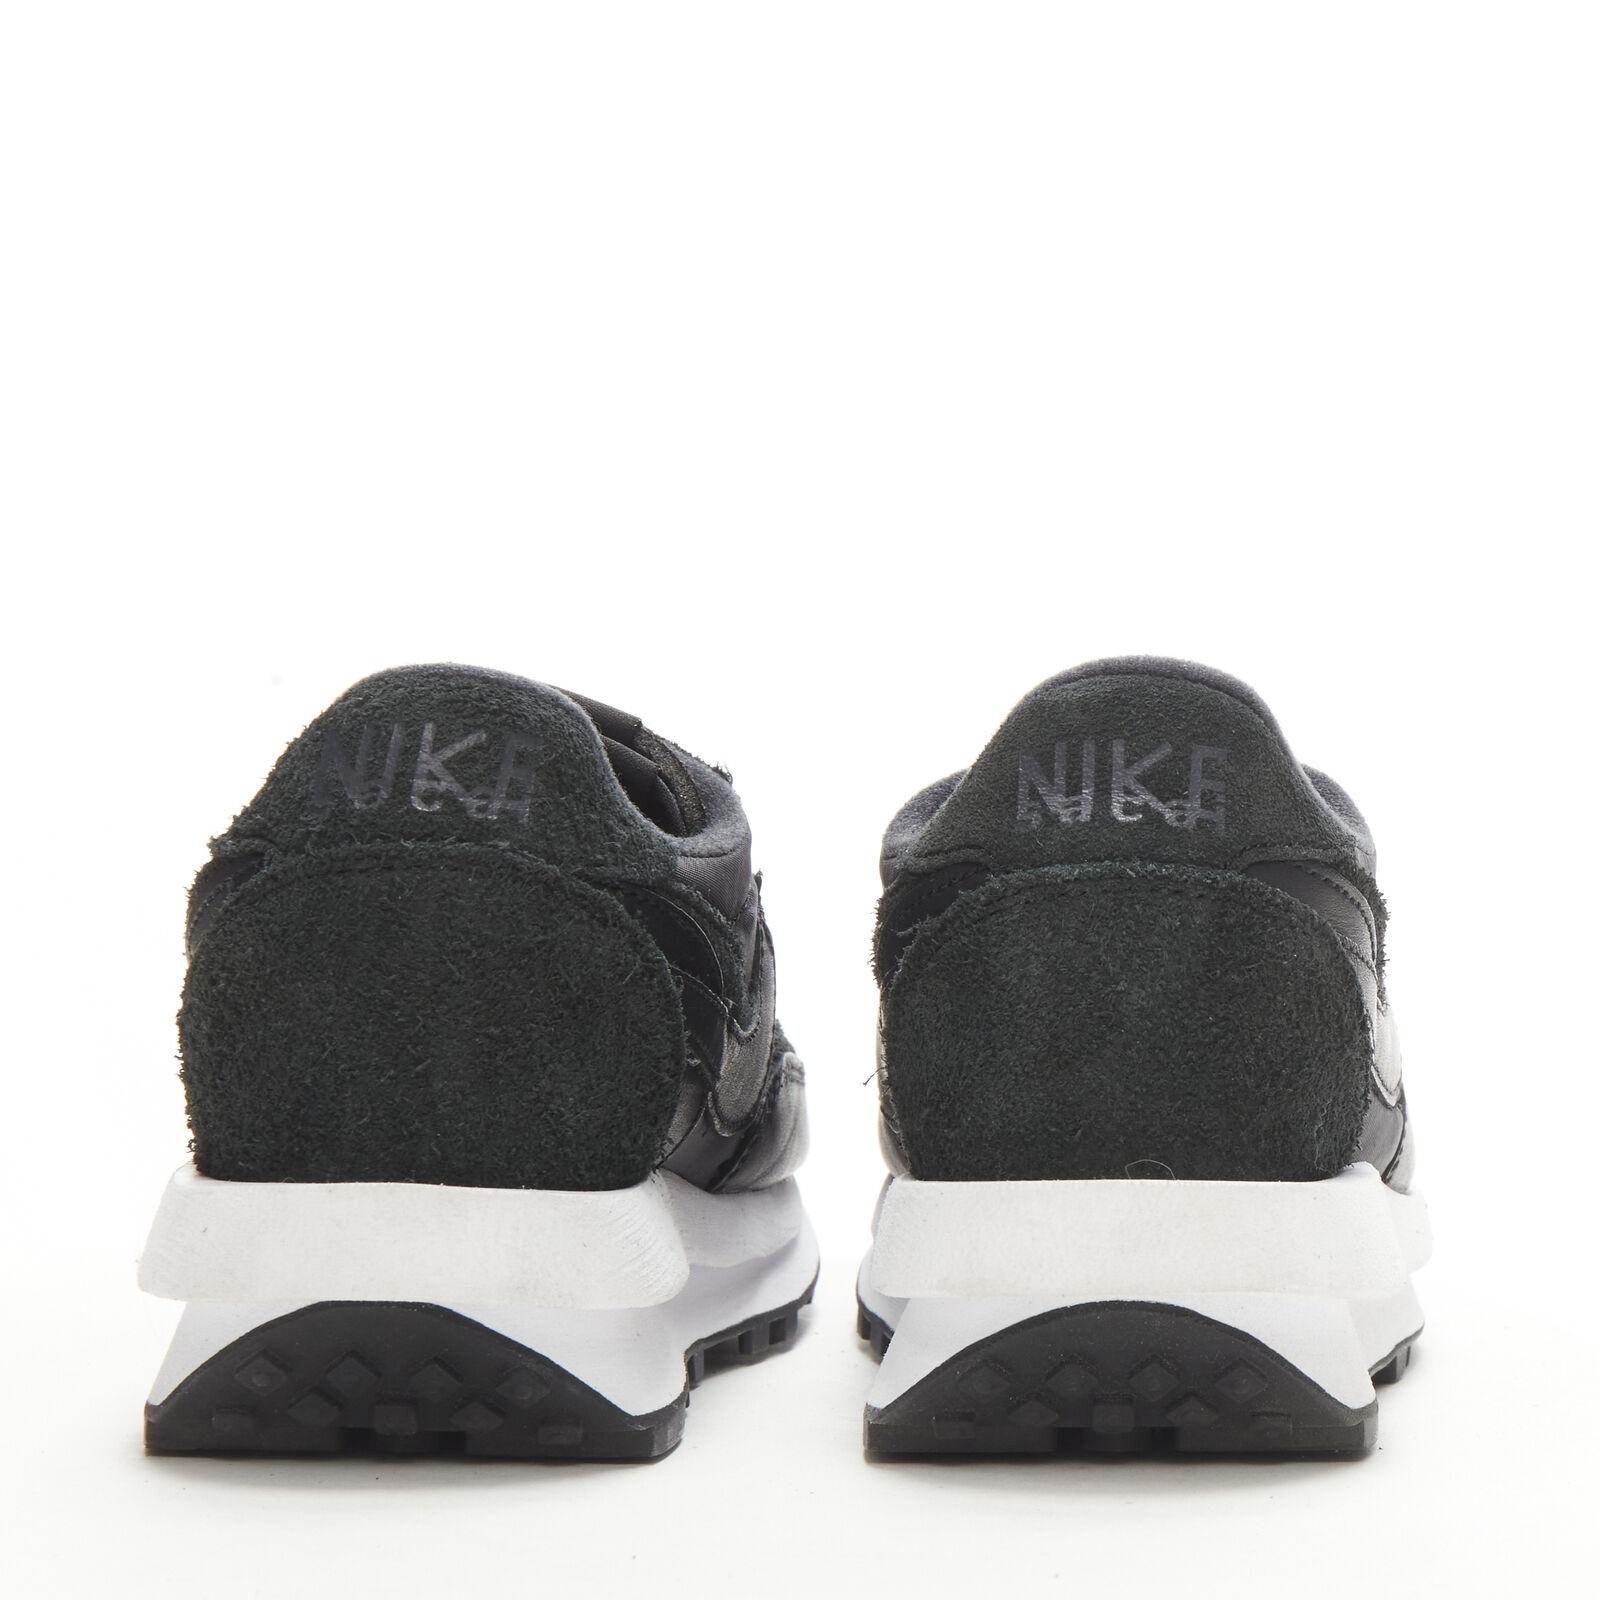 Men's NIKE SACAI LD Waffle BV0073 002 black white sneaker US5 EU37.5 For Sale